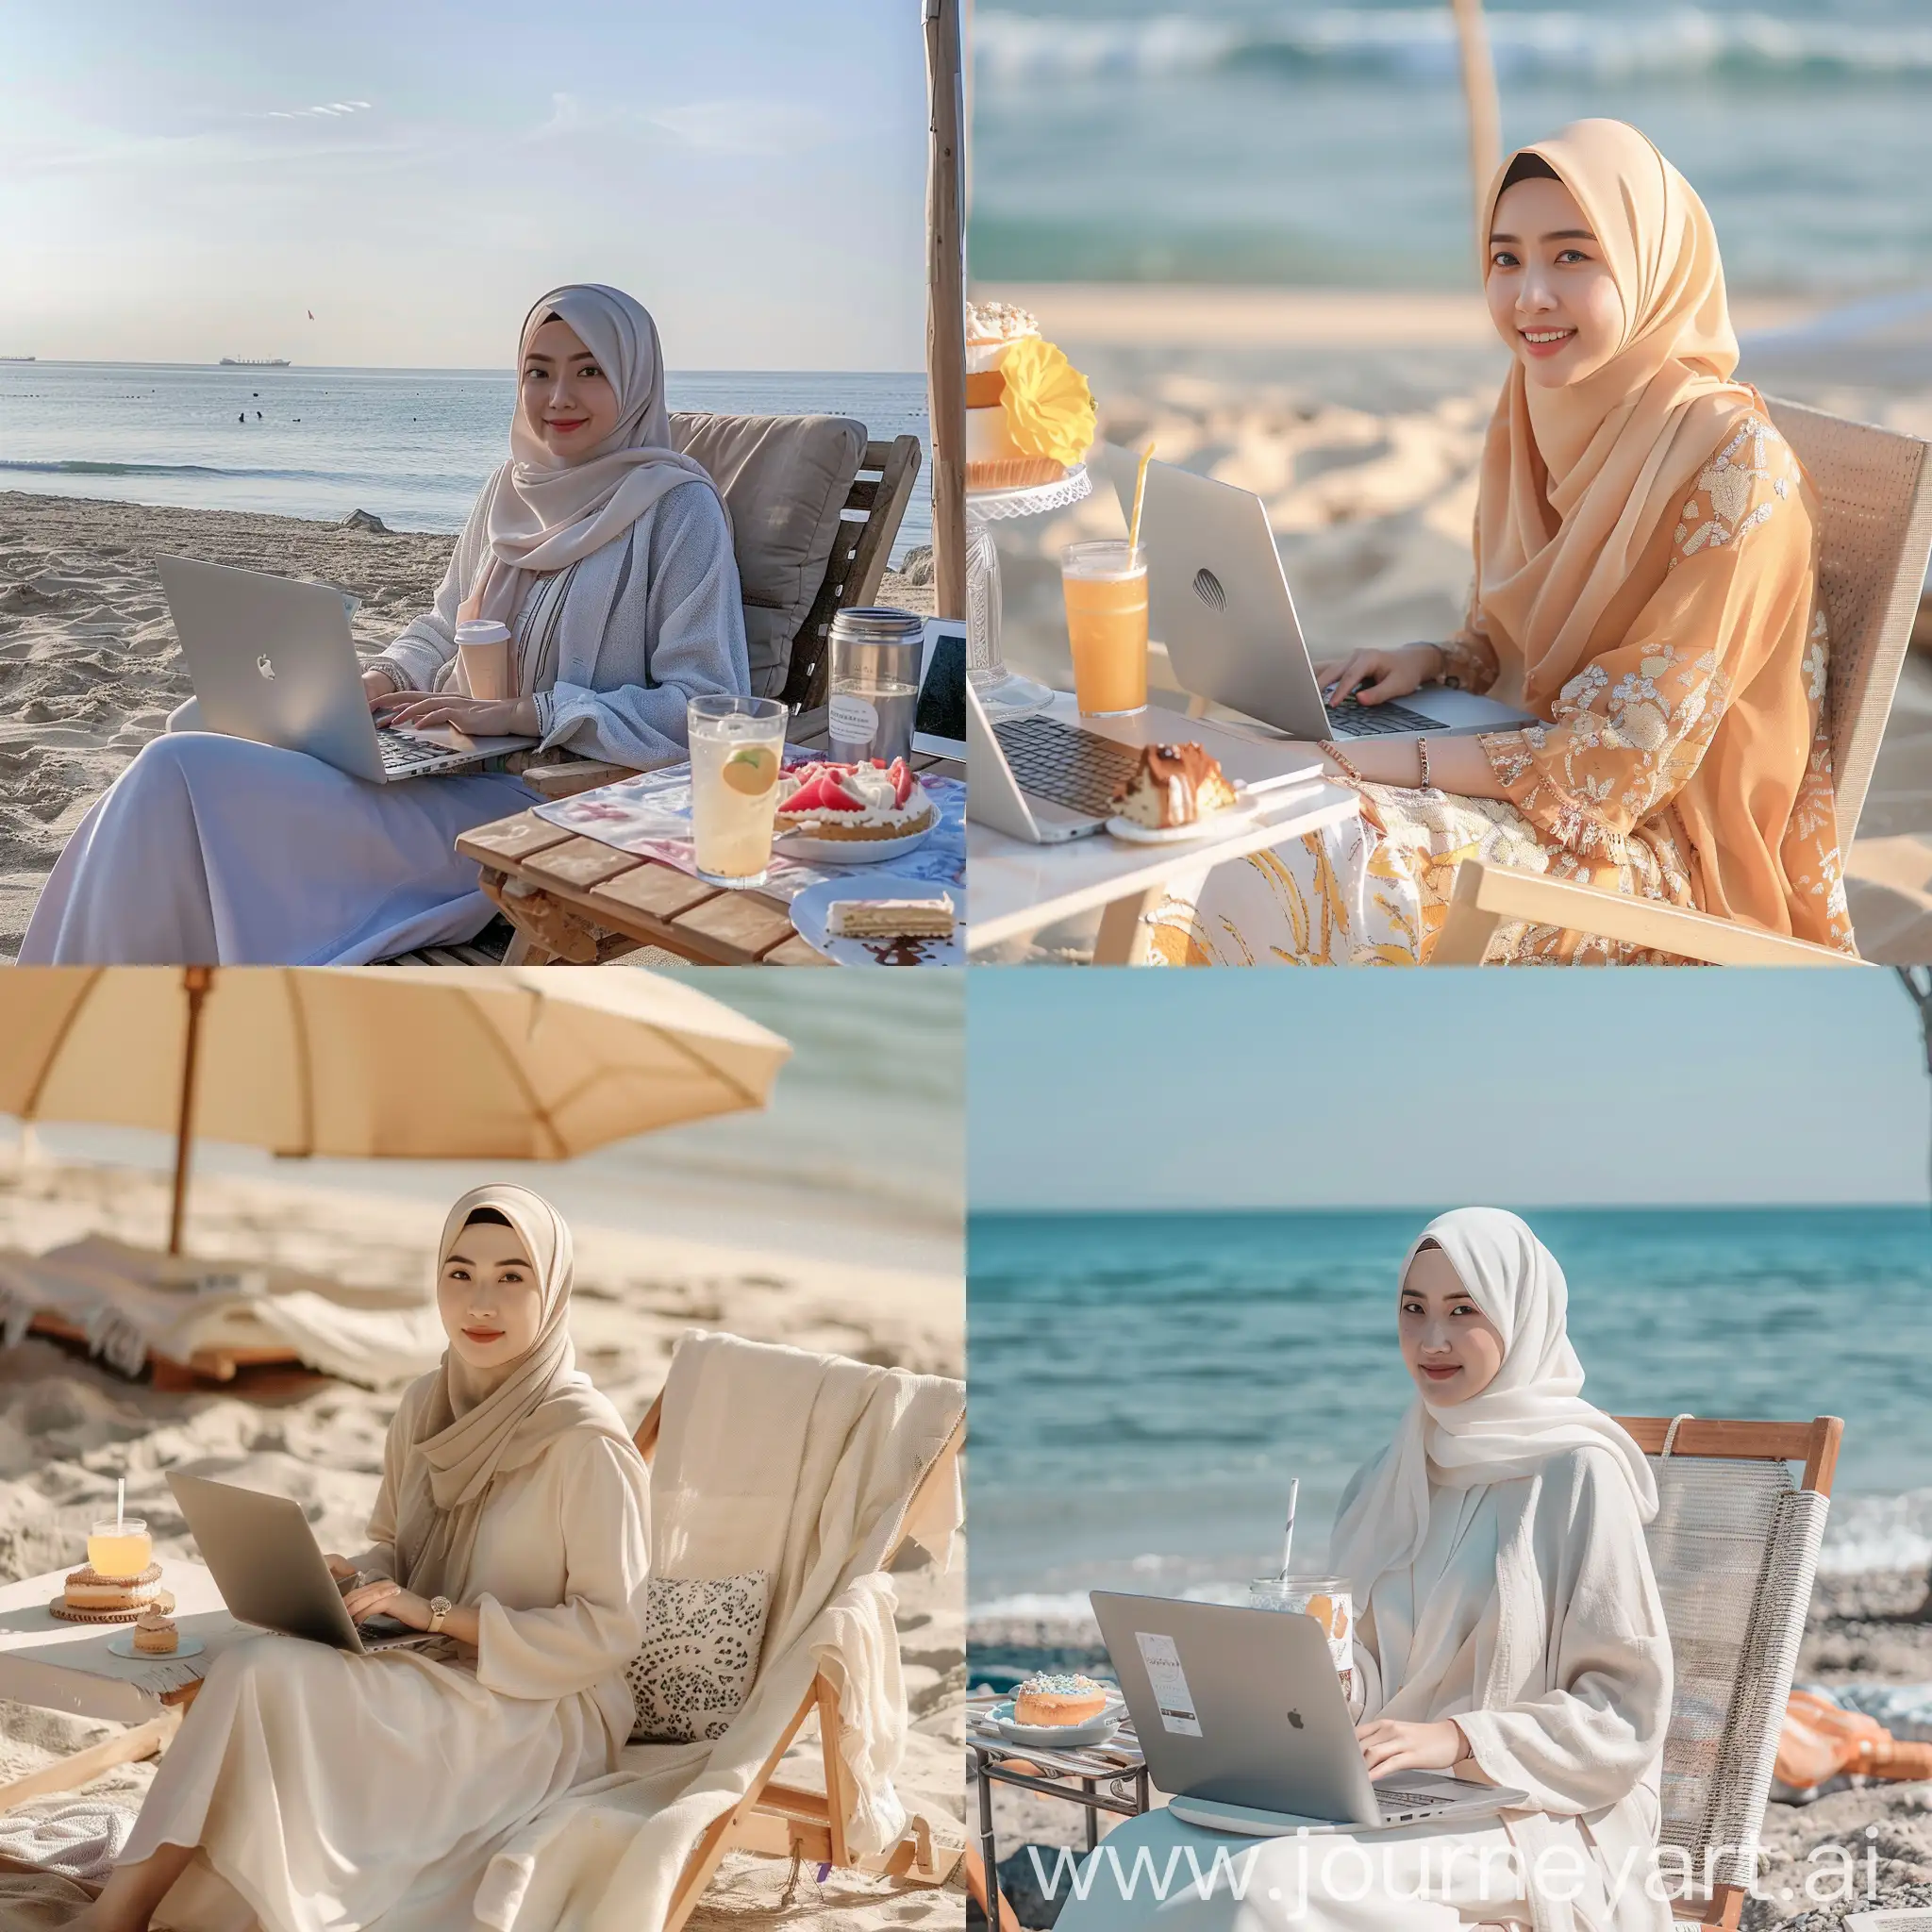 Korean-Hijab-Woman-Enjoying-Summer-Beach-with-Laptop-and-Refreshments